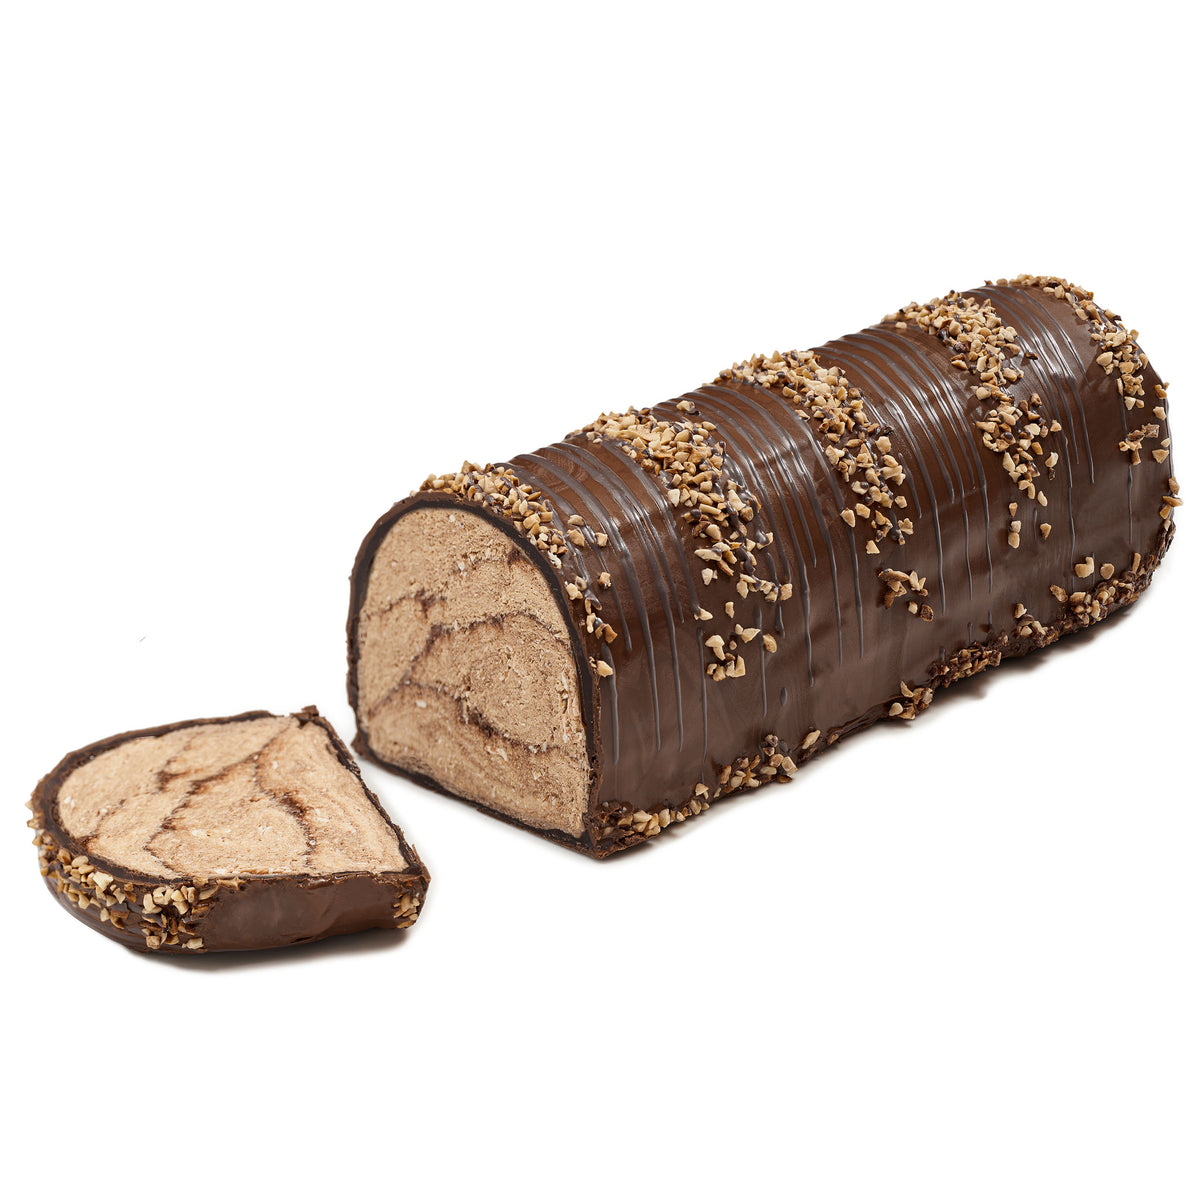 Fames Zebra Halva Dark Chocolate Log – Handcrafted With Deluxe Gift Box  Fames Chocolate